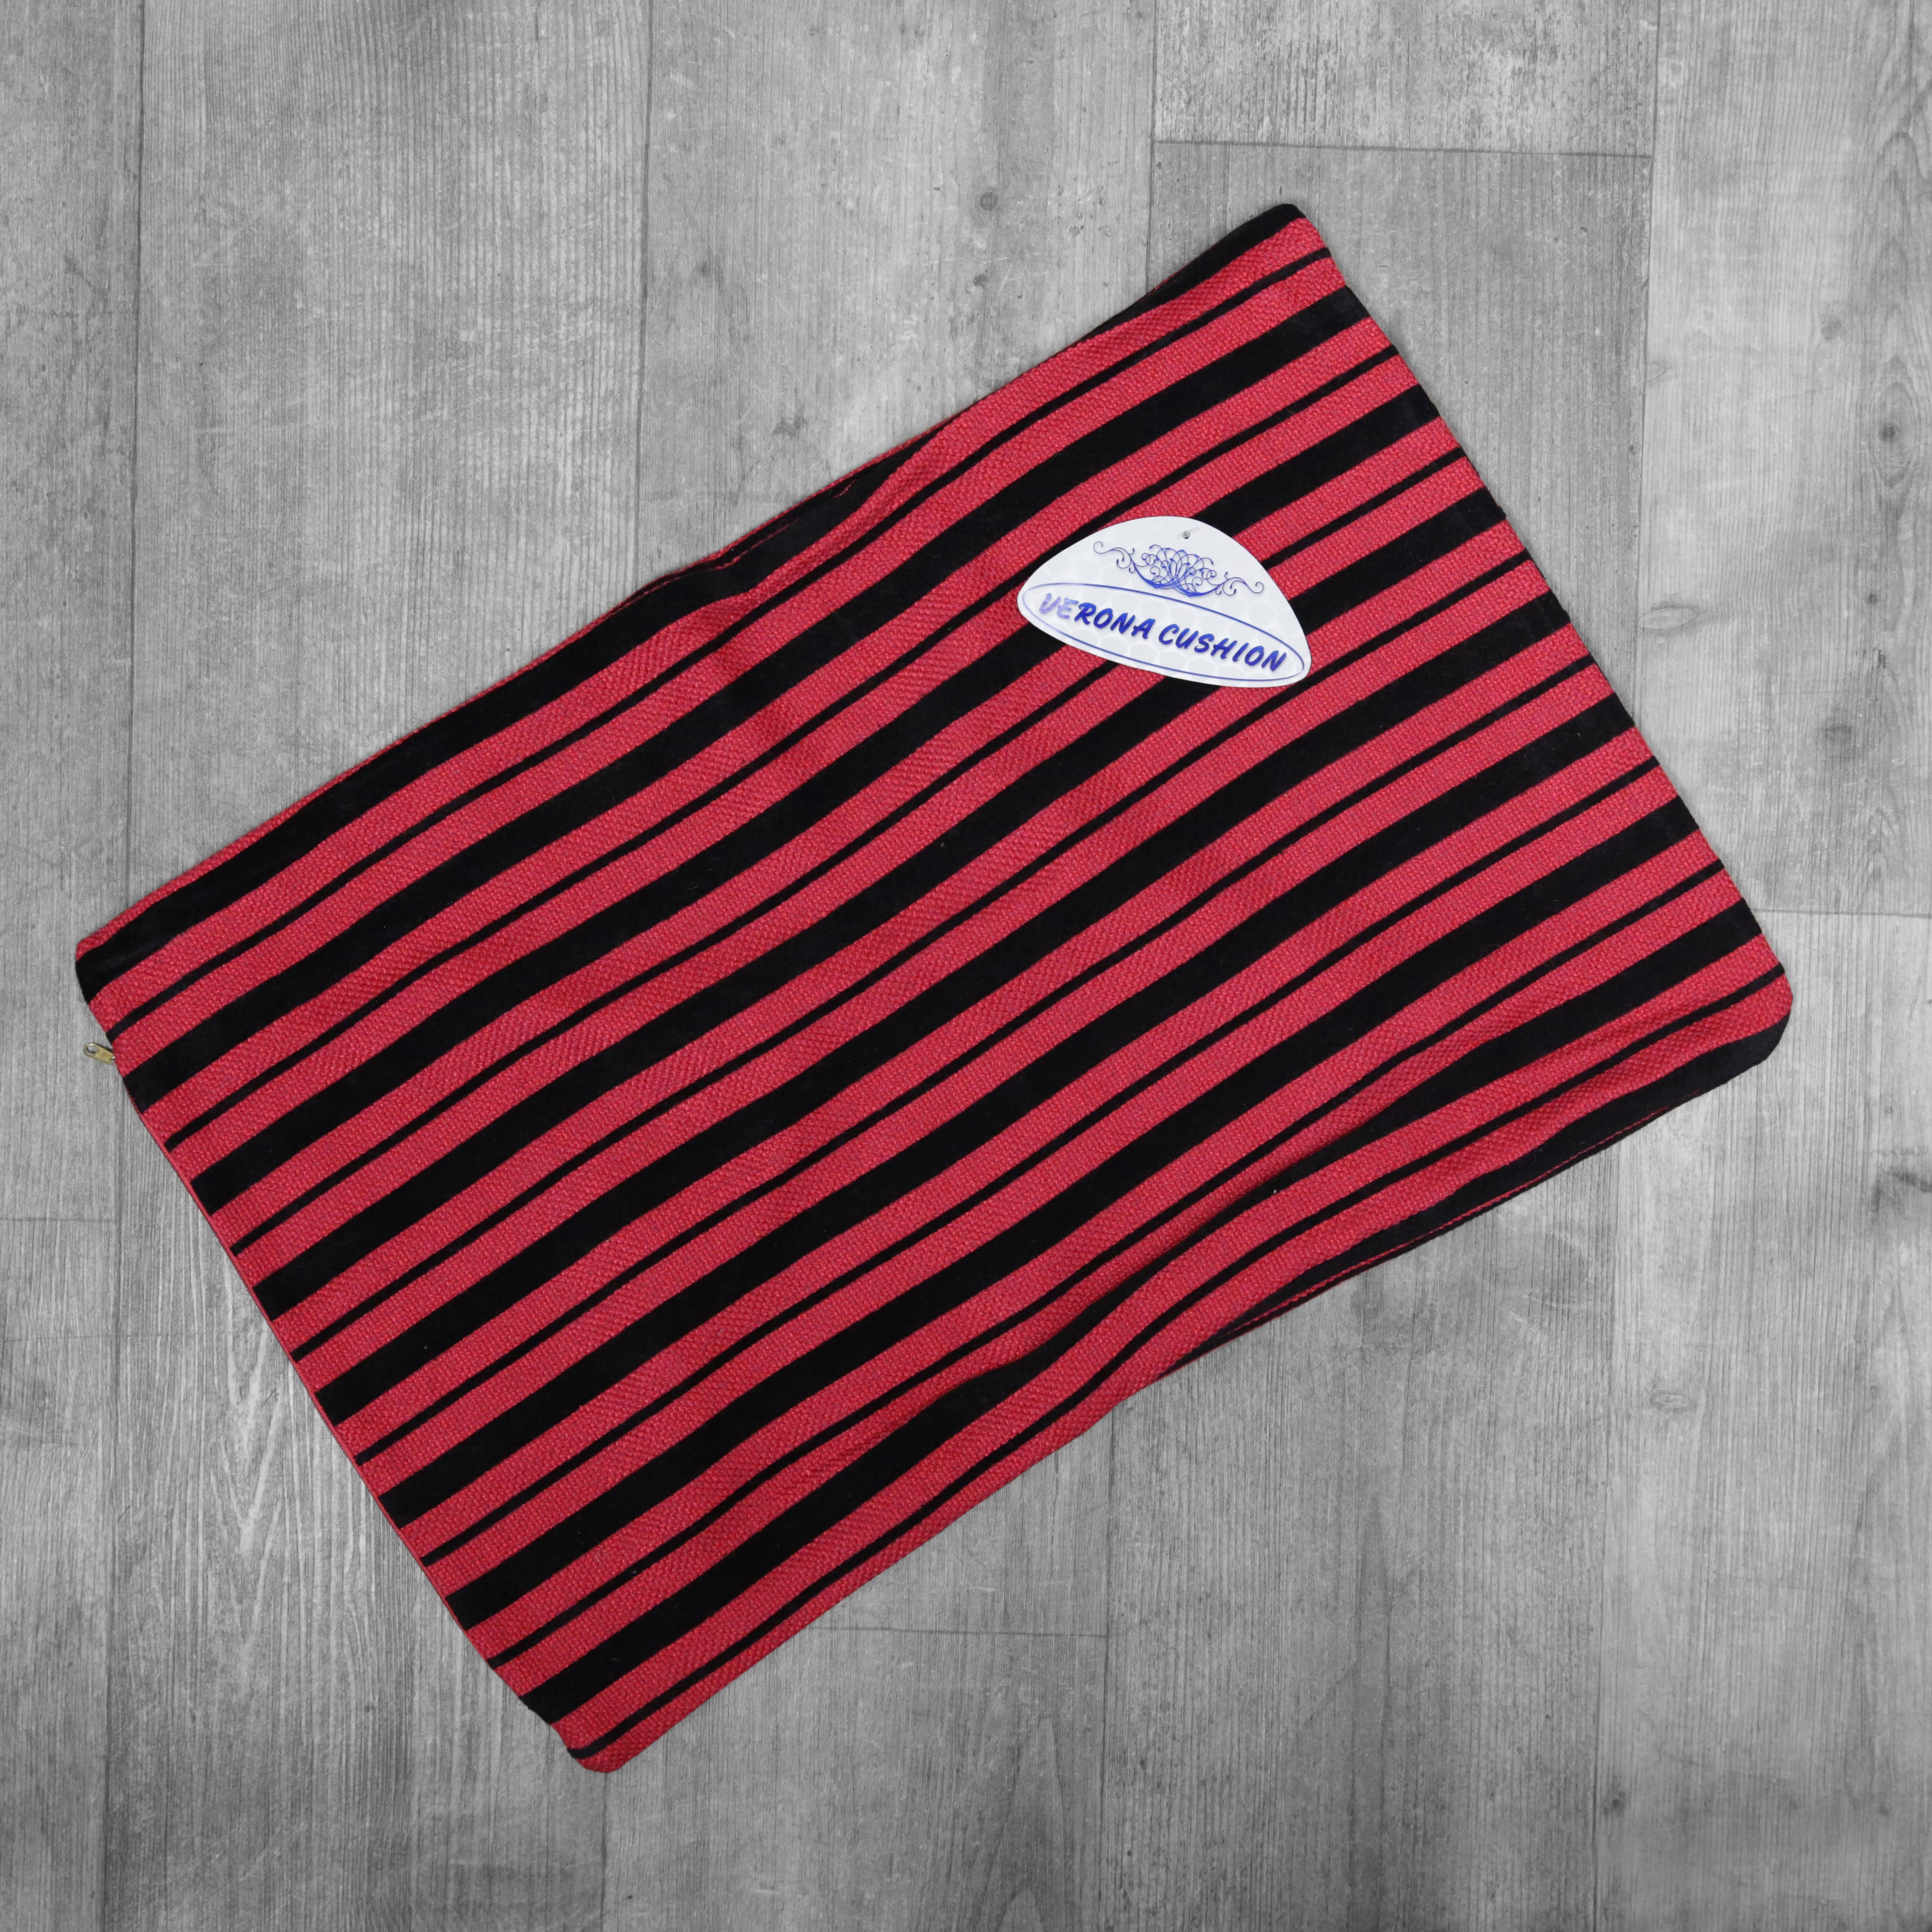 Verona Cushion Cover - Red/Black Stripes - 60 x 40cm